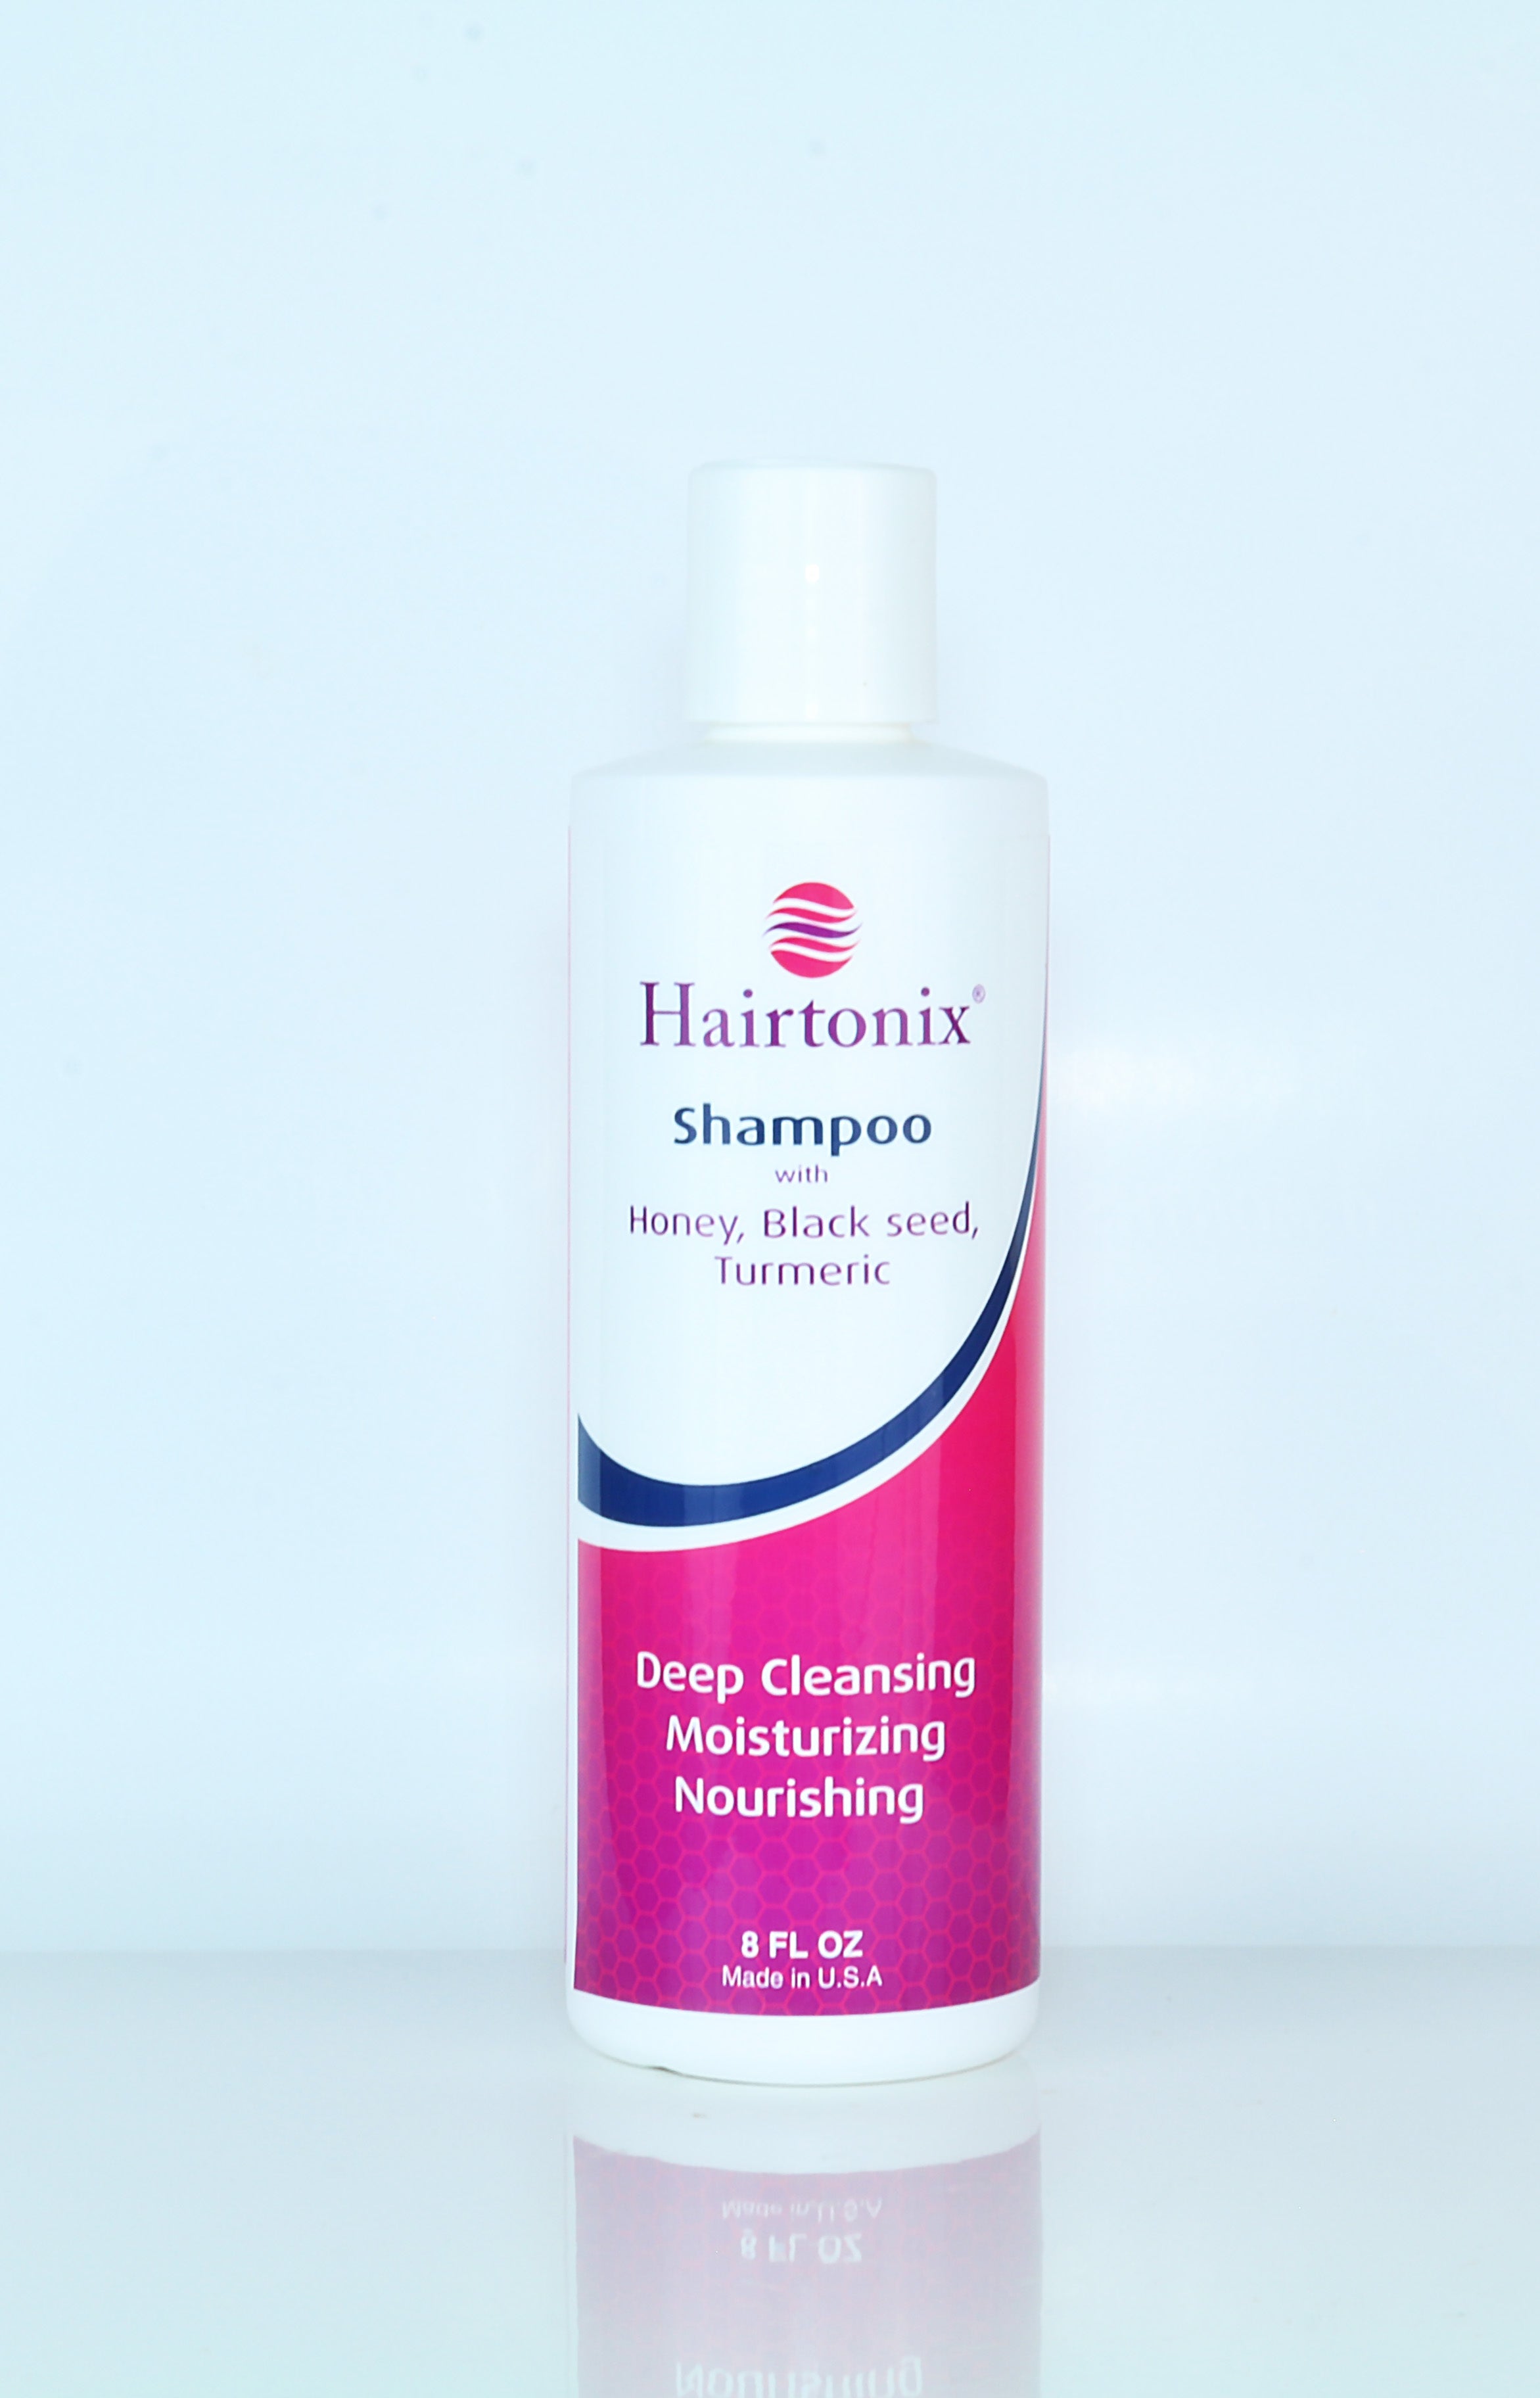 Hairtonix Herbal Shampoo (1 Year Supply)